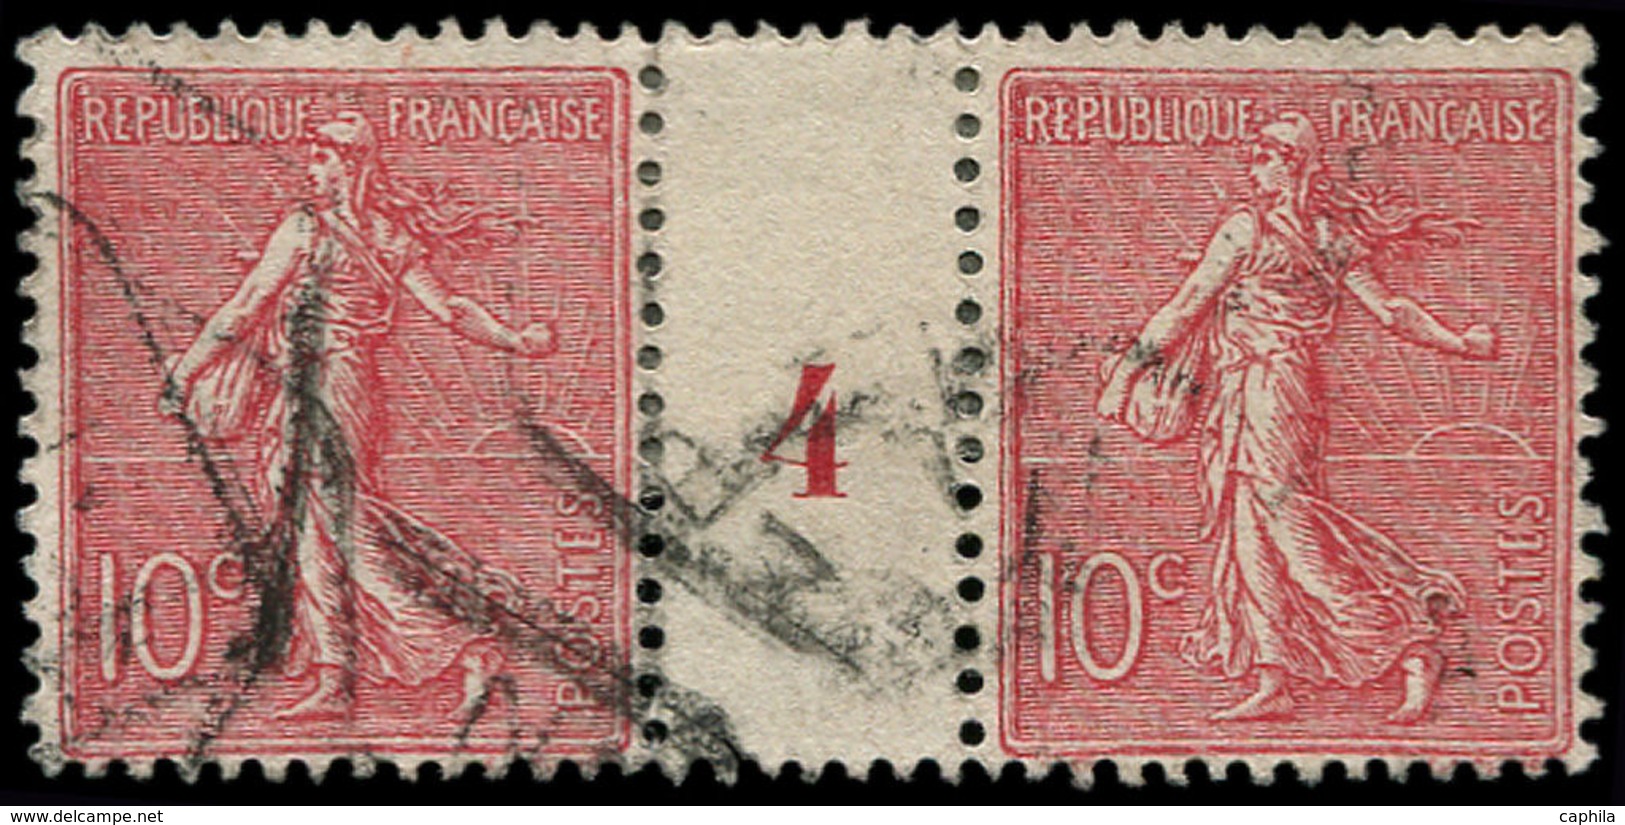 O FRANCE - Poste - 129, Paire, Type II, 10c. Semeuse Lignée Rose, Millésime "6" - 1849-1850 Cérès